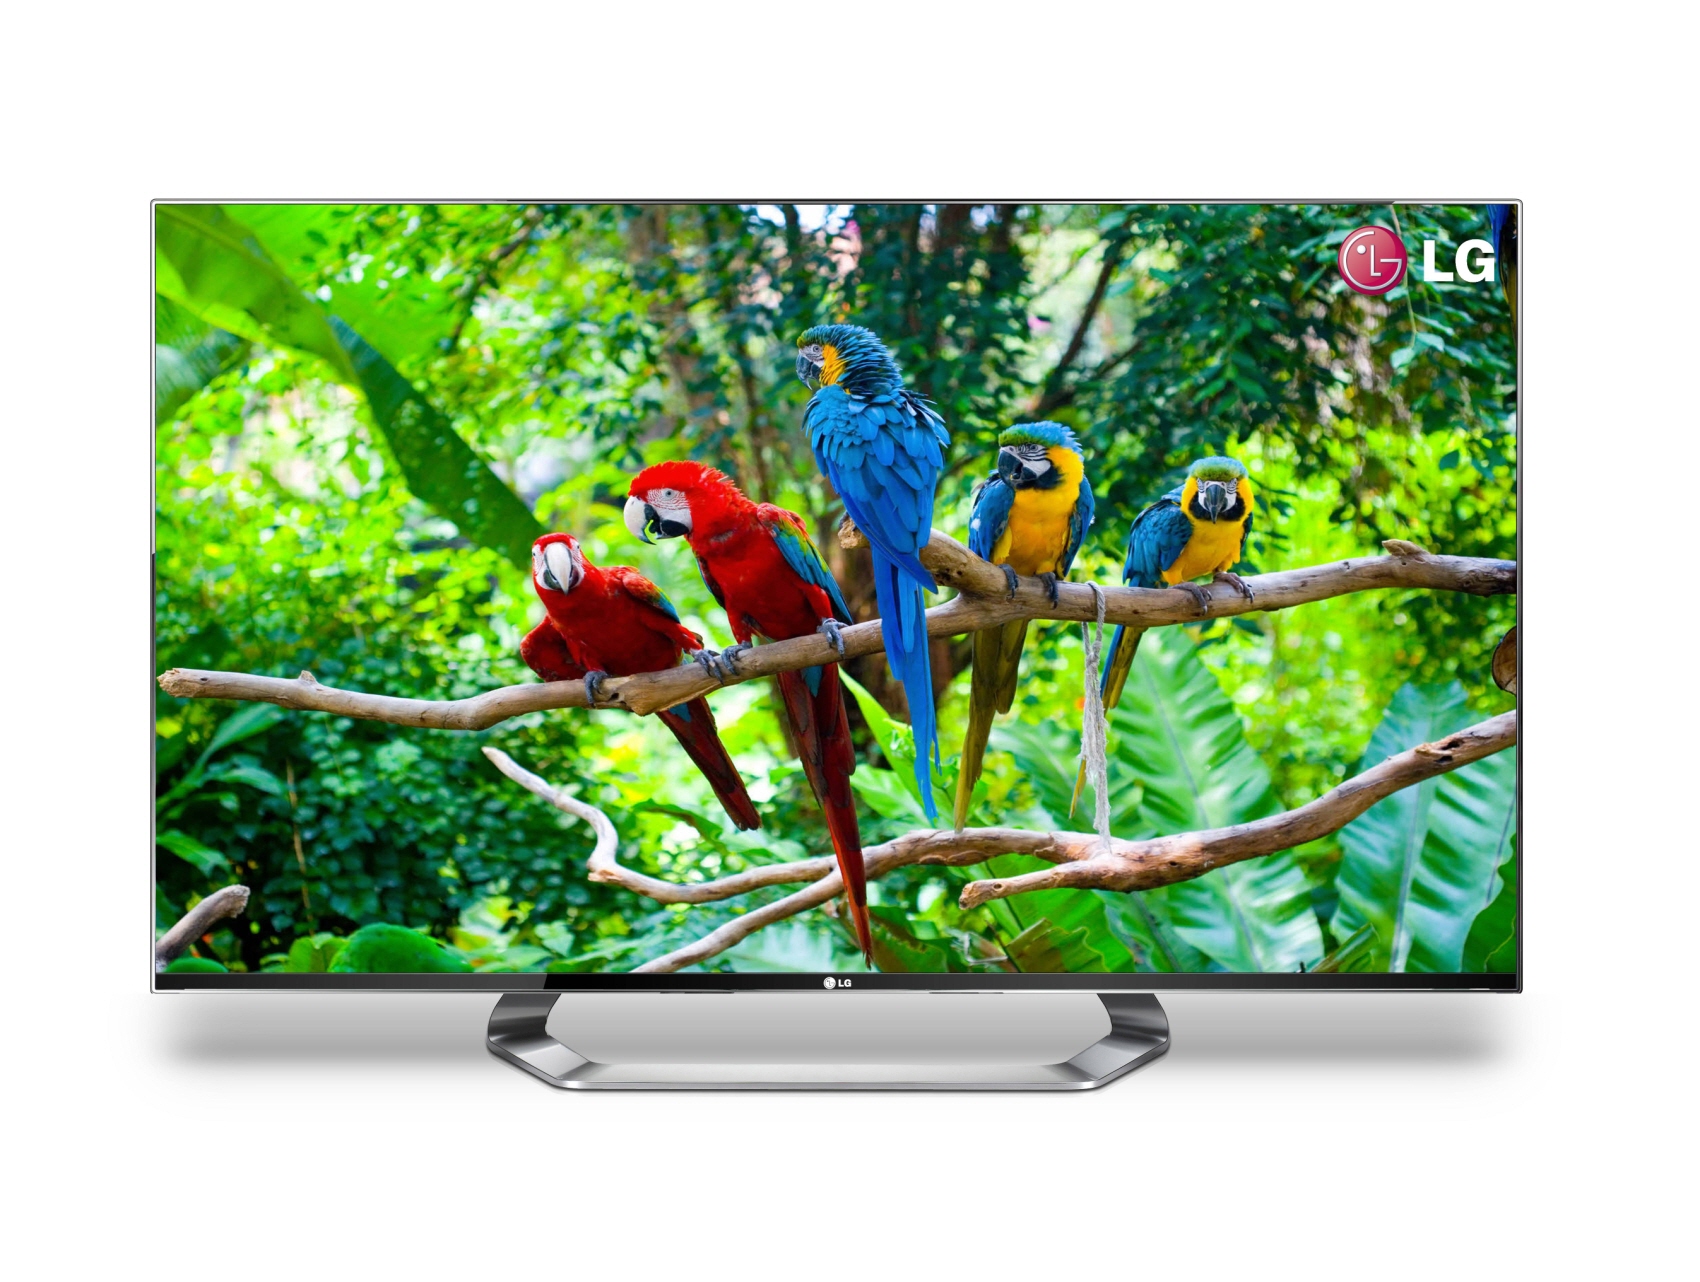 LG’s 55-inch CINEMA 3D Smart TV model 55LM9600